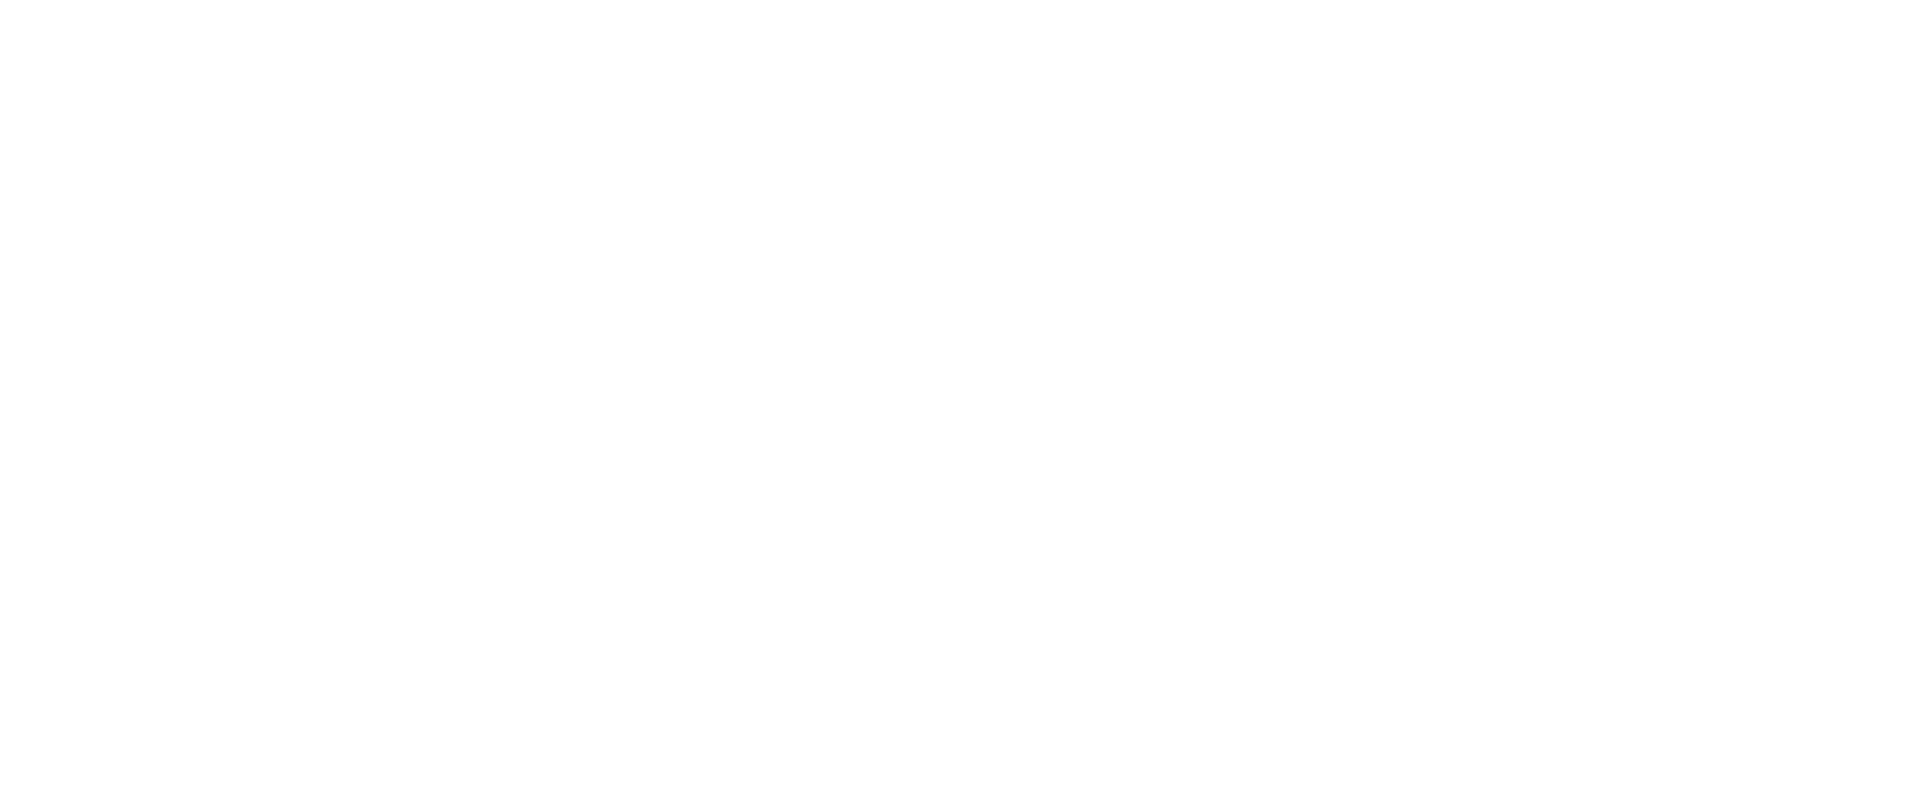 Browar Hoplala logo